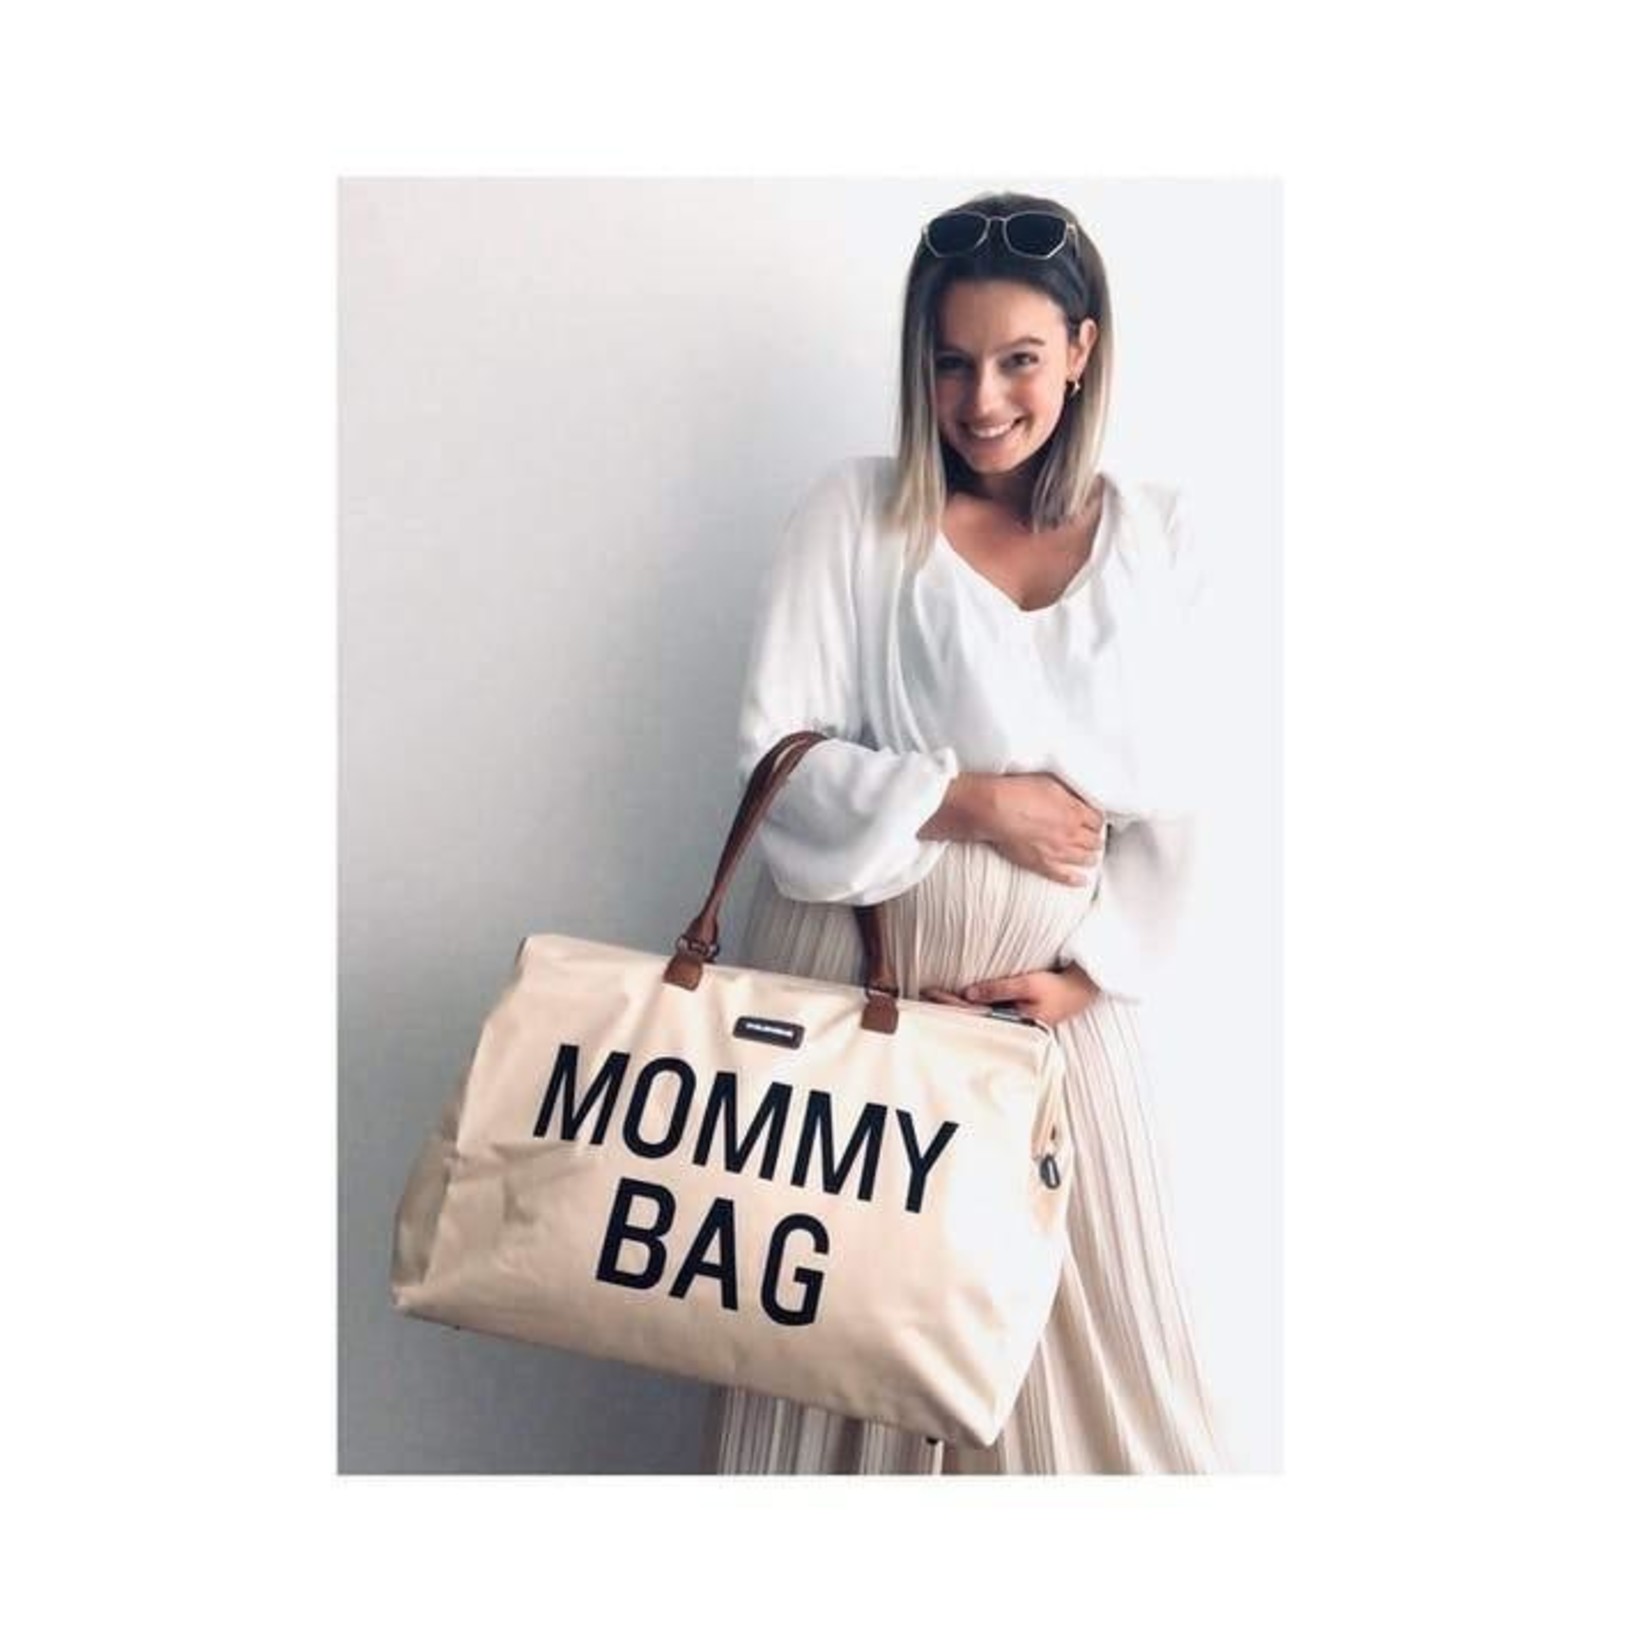 childhome Mommy bag teddy écru